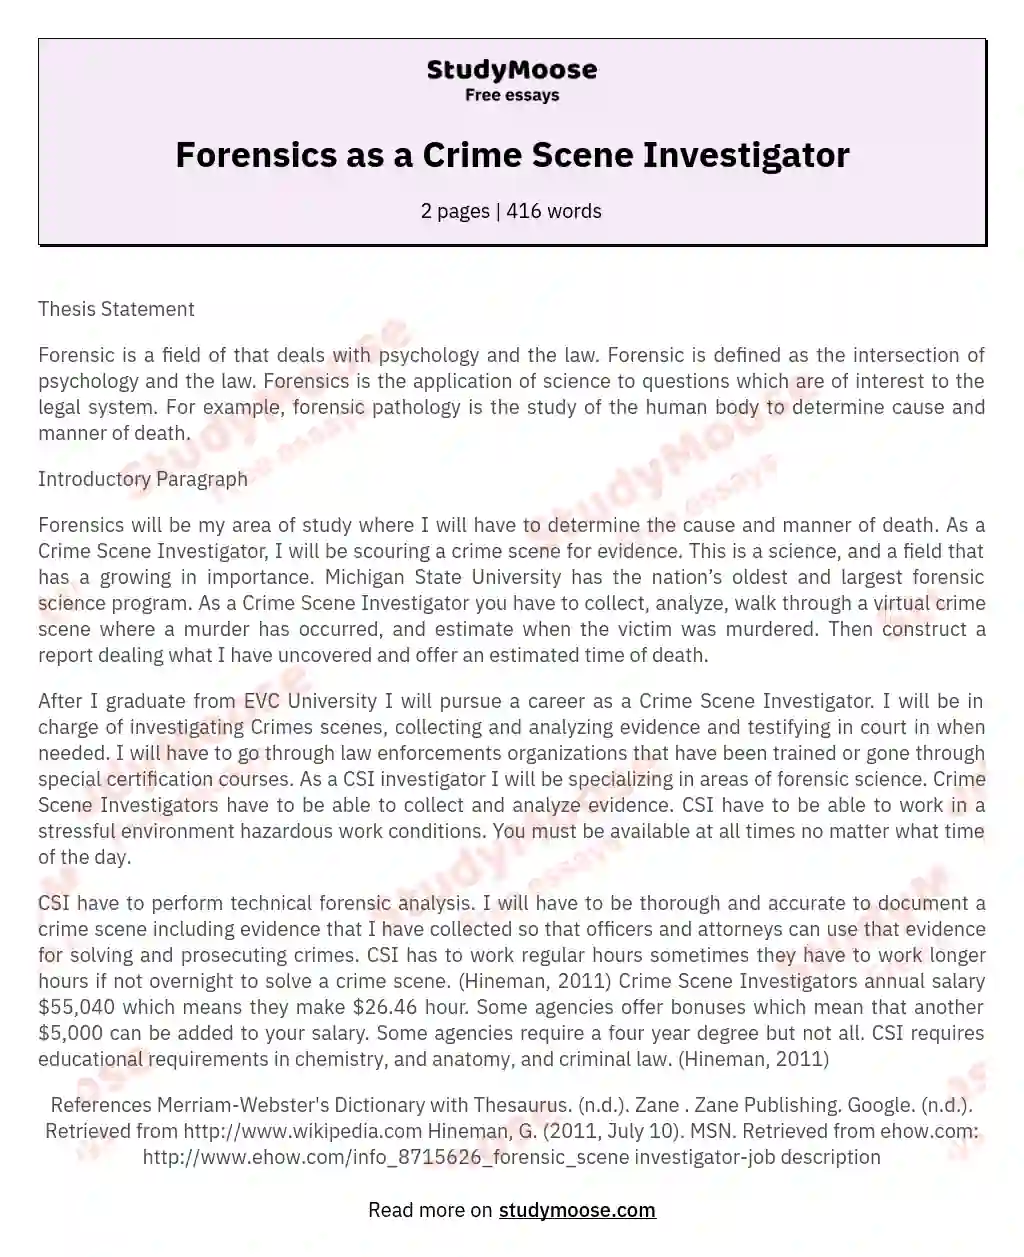 Forensics as a Crime Scene Investigator essay